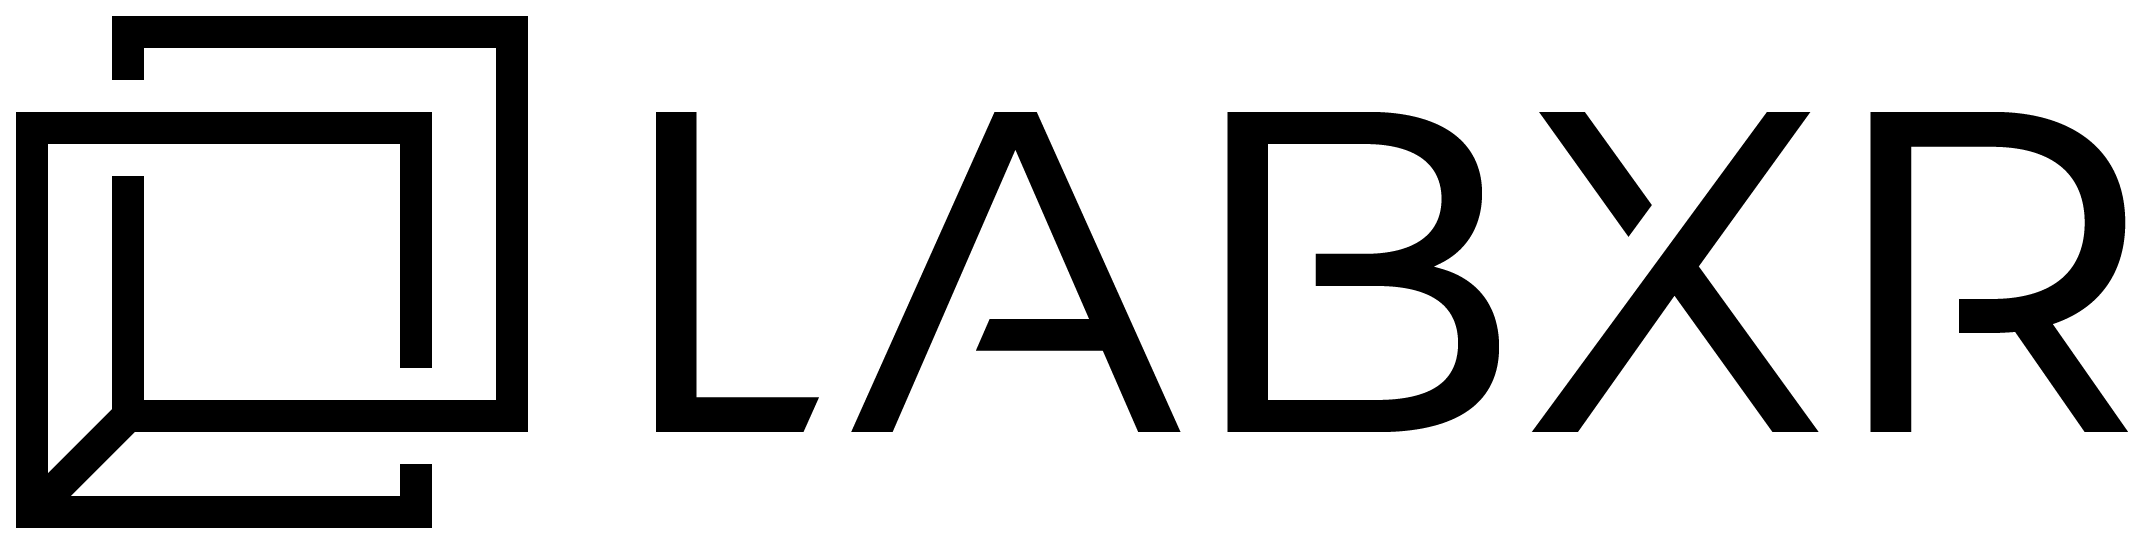 labxr 的標誌是使用 WordPress 創建的。